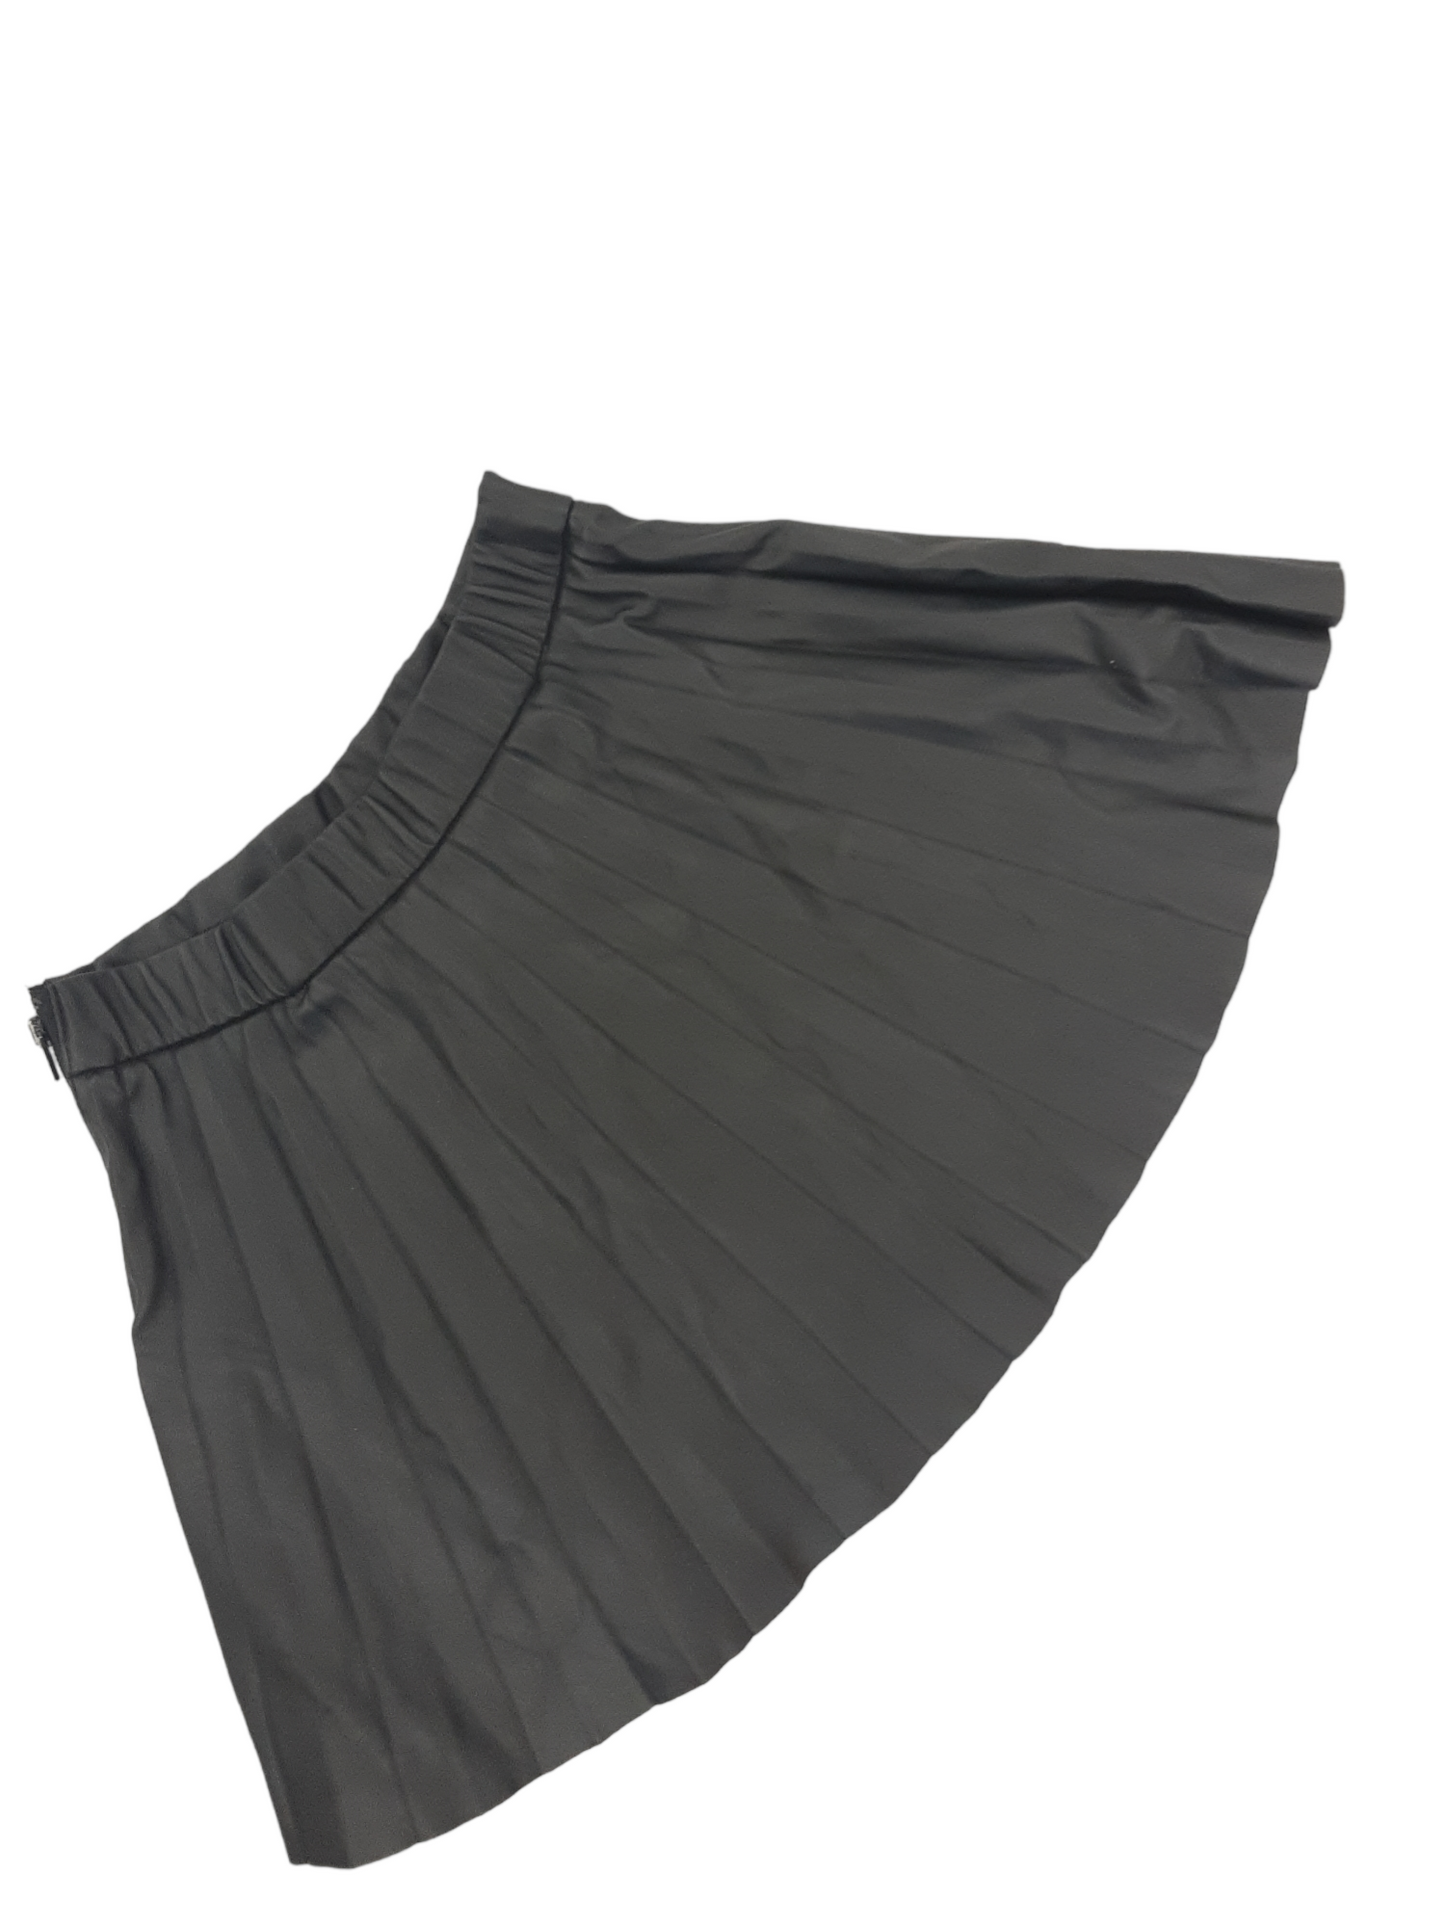 Stylish skirt size 4t